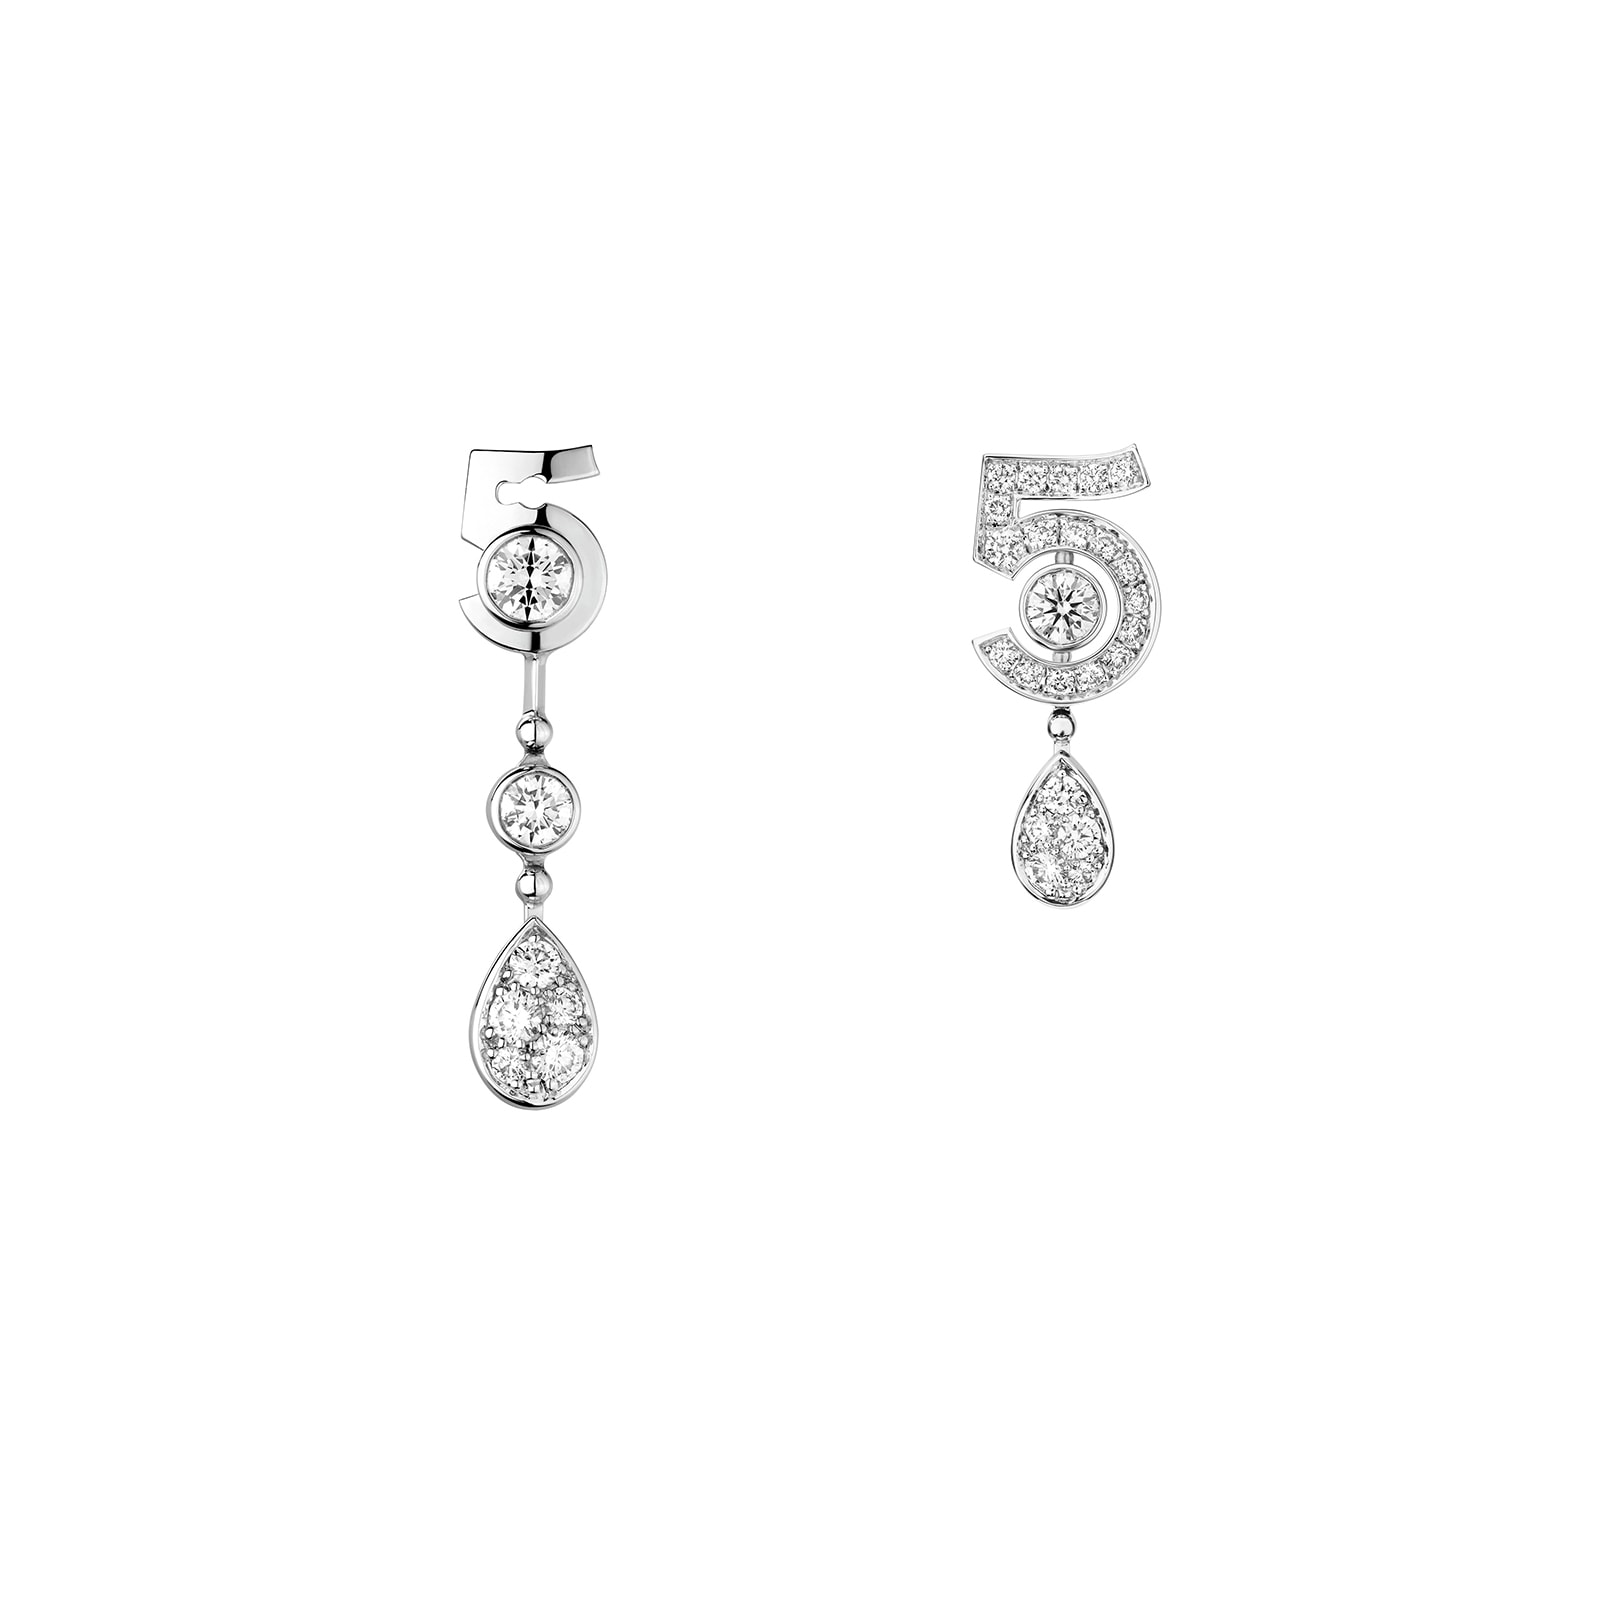 CHANEL, Jewelry, Cc Chanel 4k White Gold Diamond Earrings